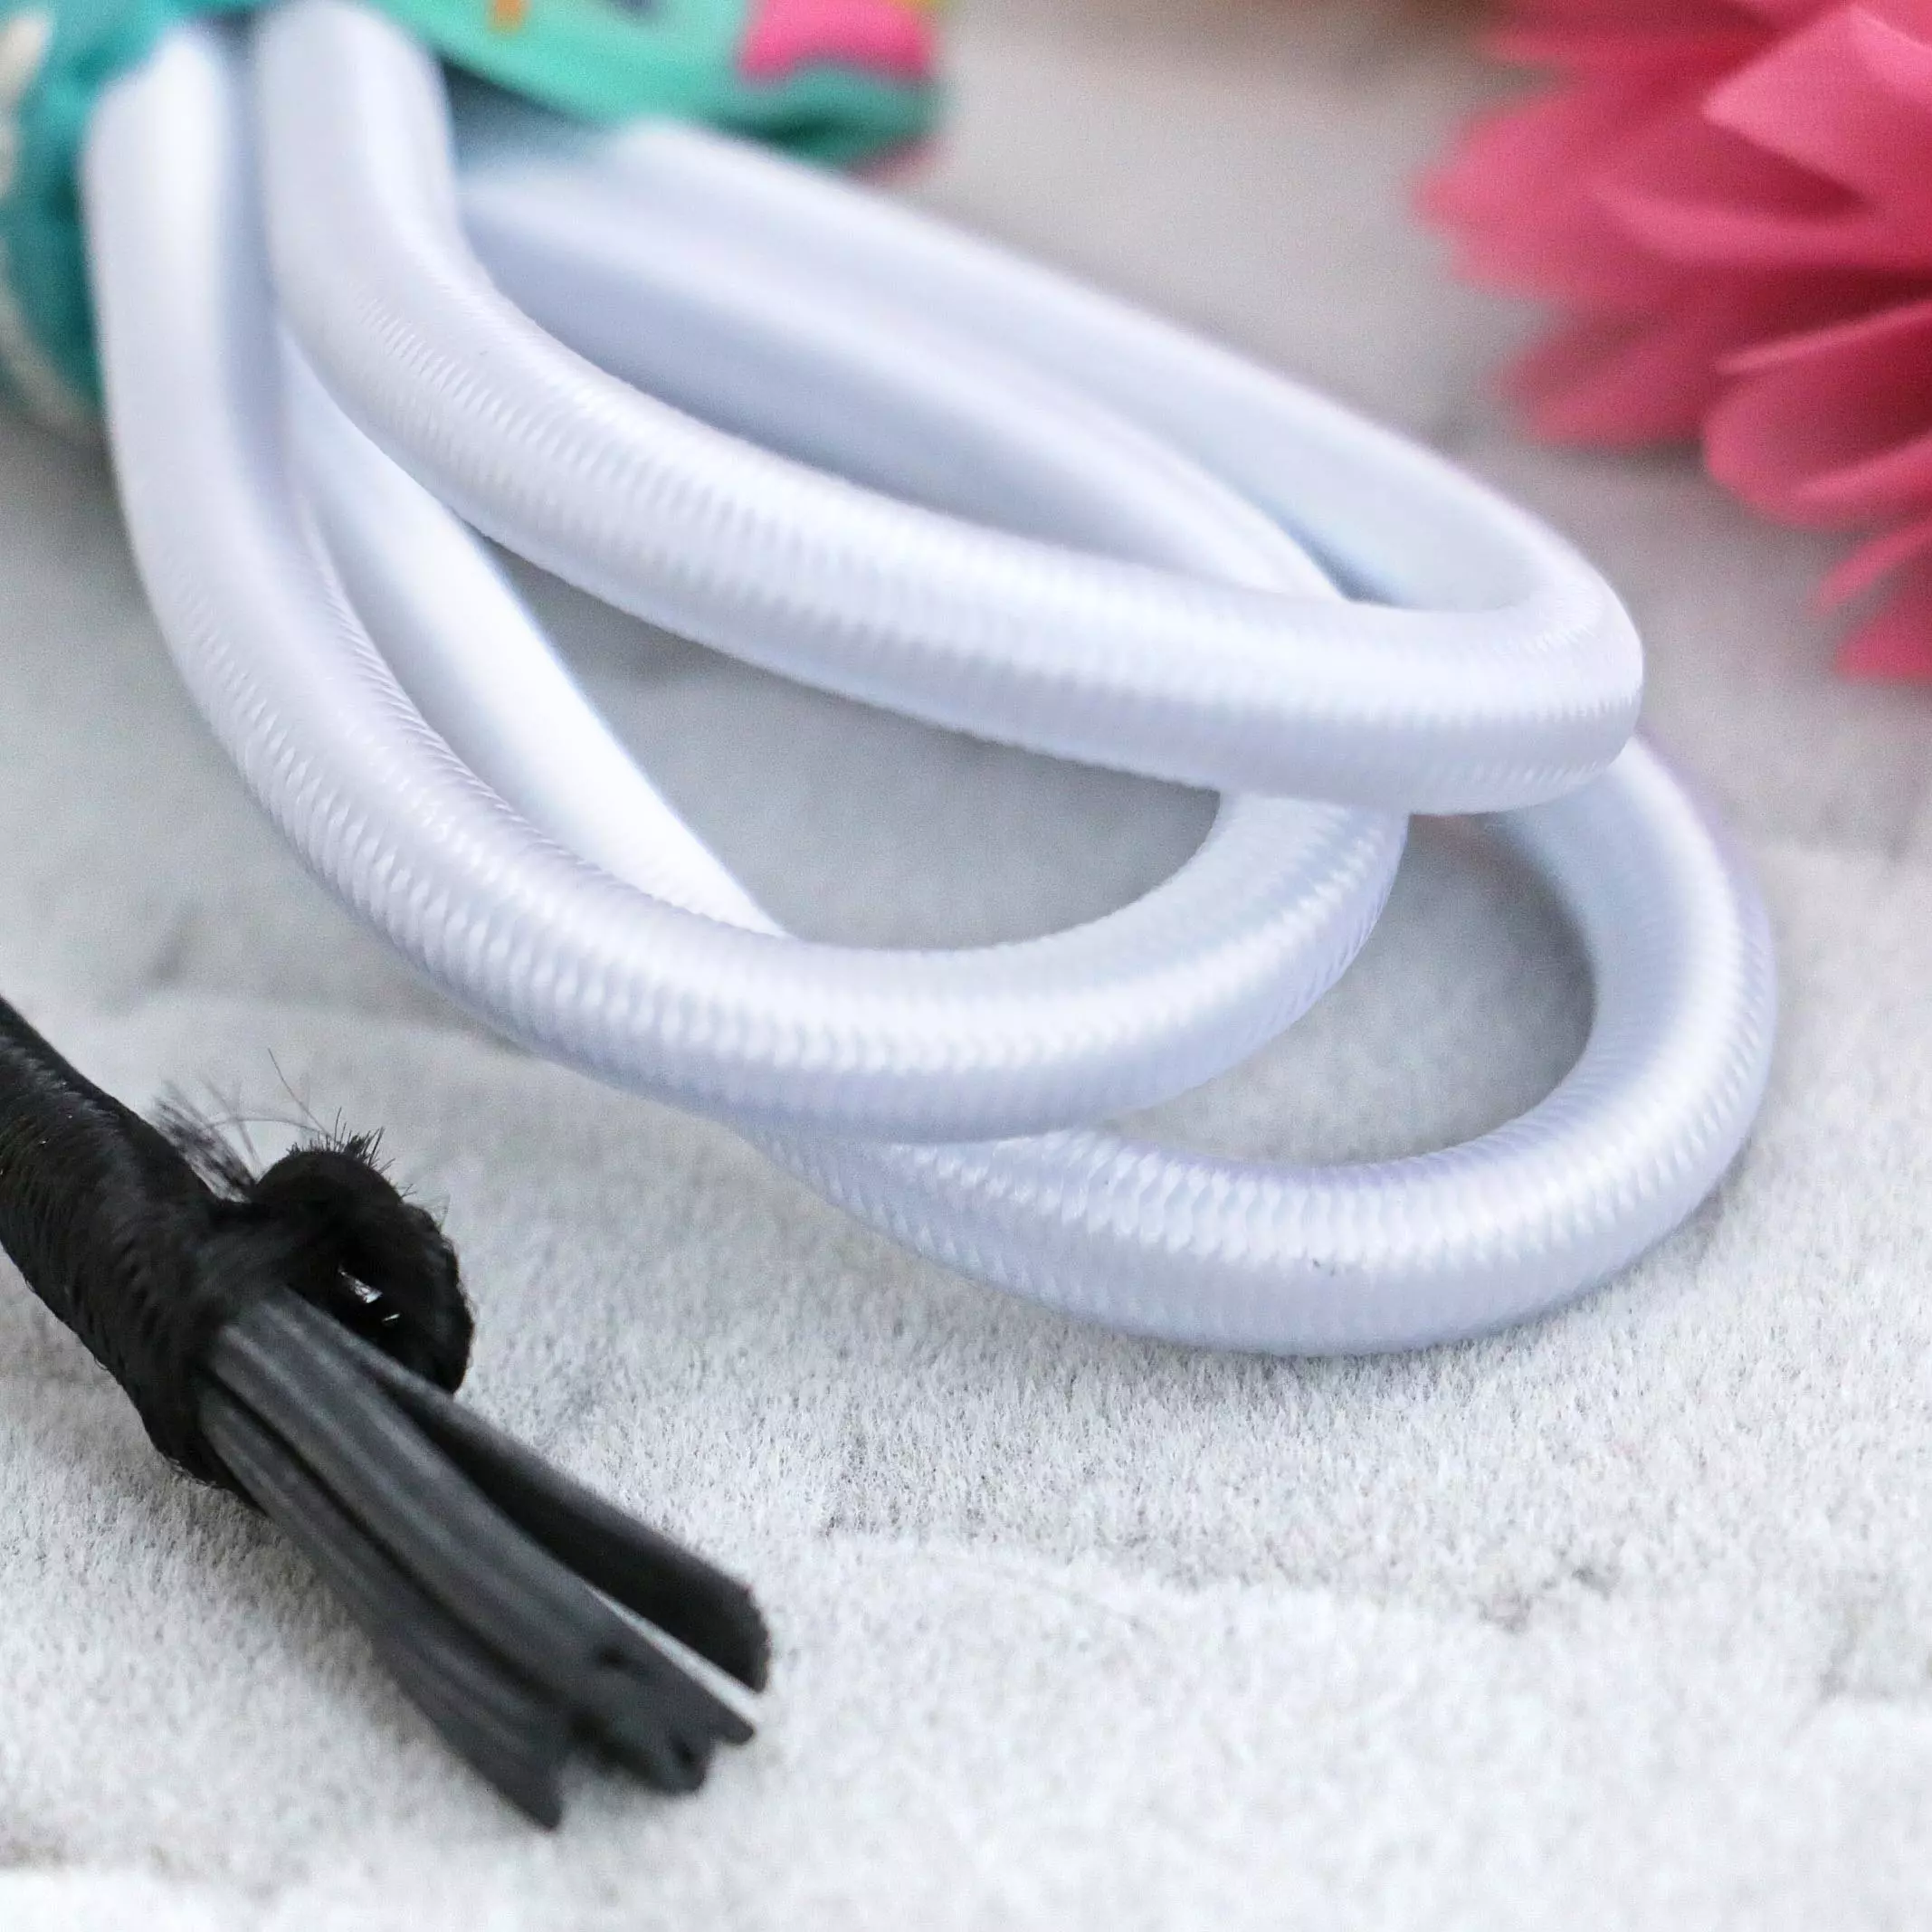 Black 3mm Round Knitted Elastic Cord | Latex Free Elastic Cord 